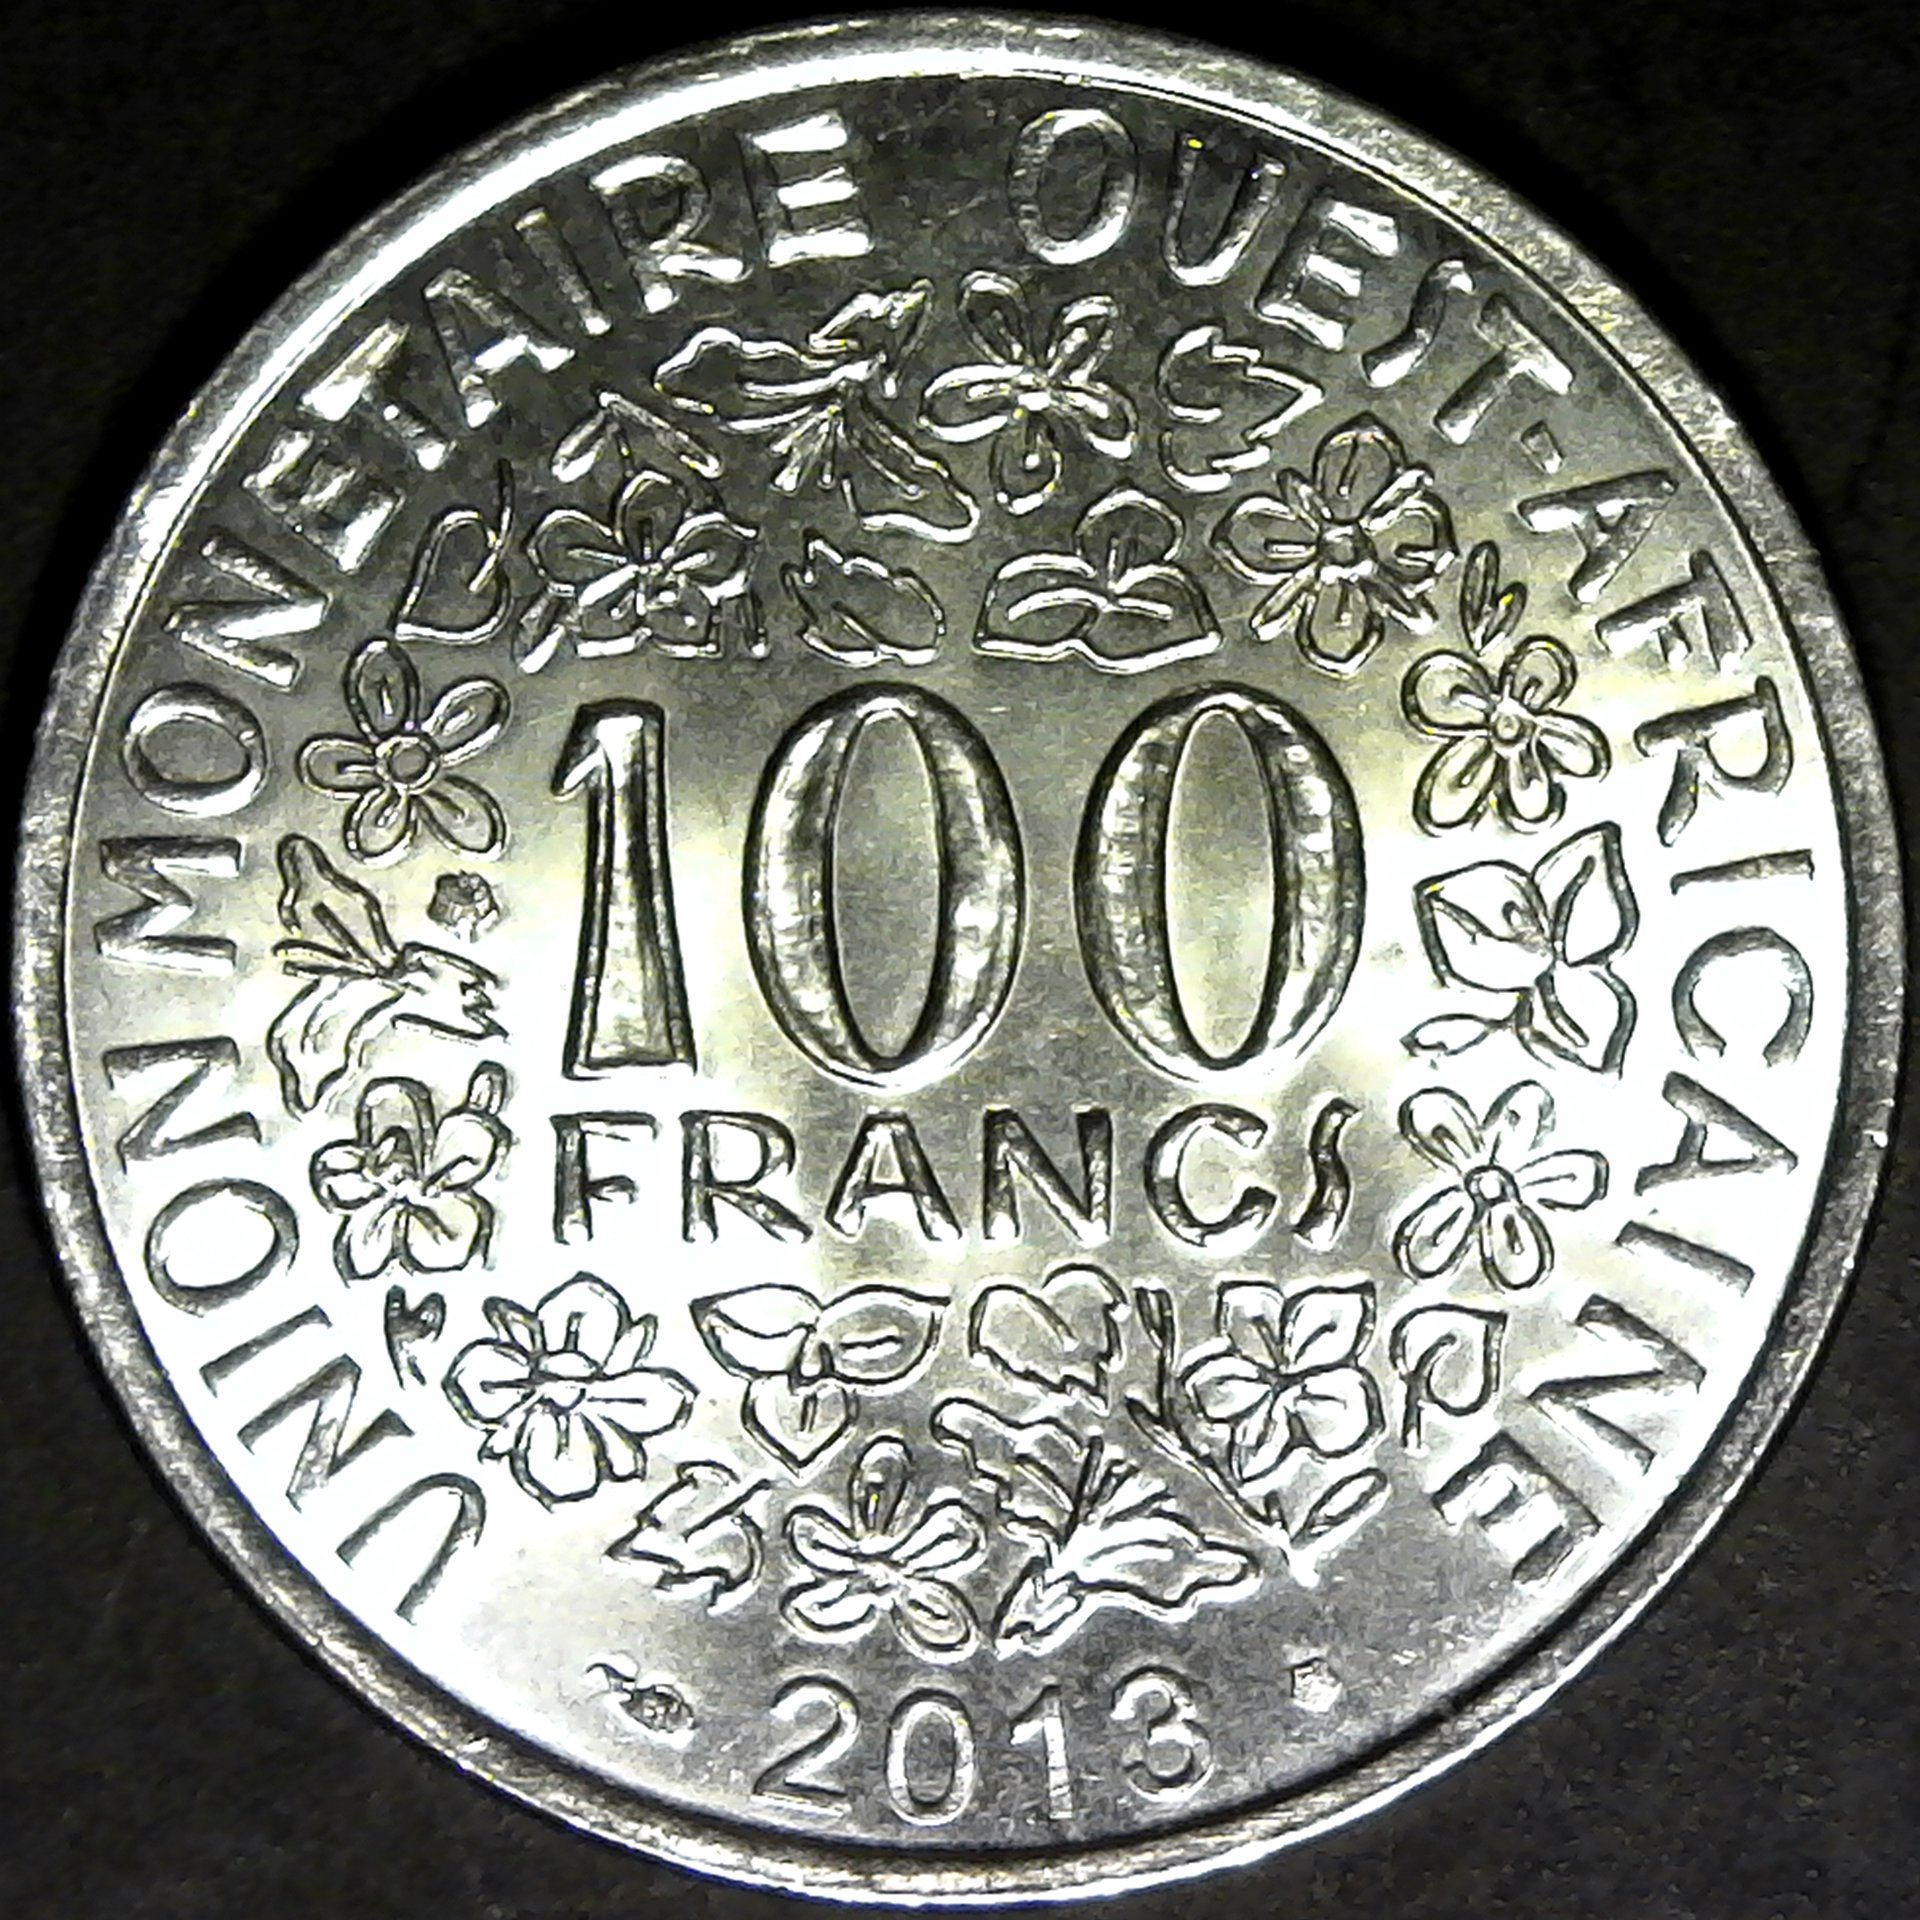 French West Africa 100 Francs 2013 obv.jpg